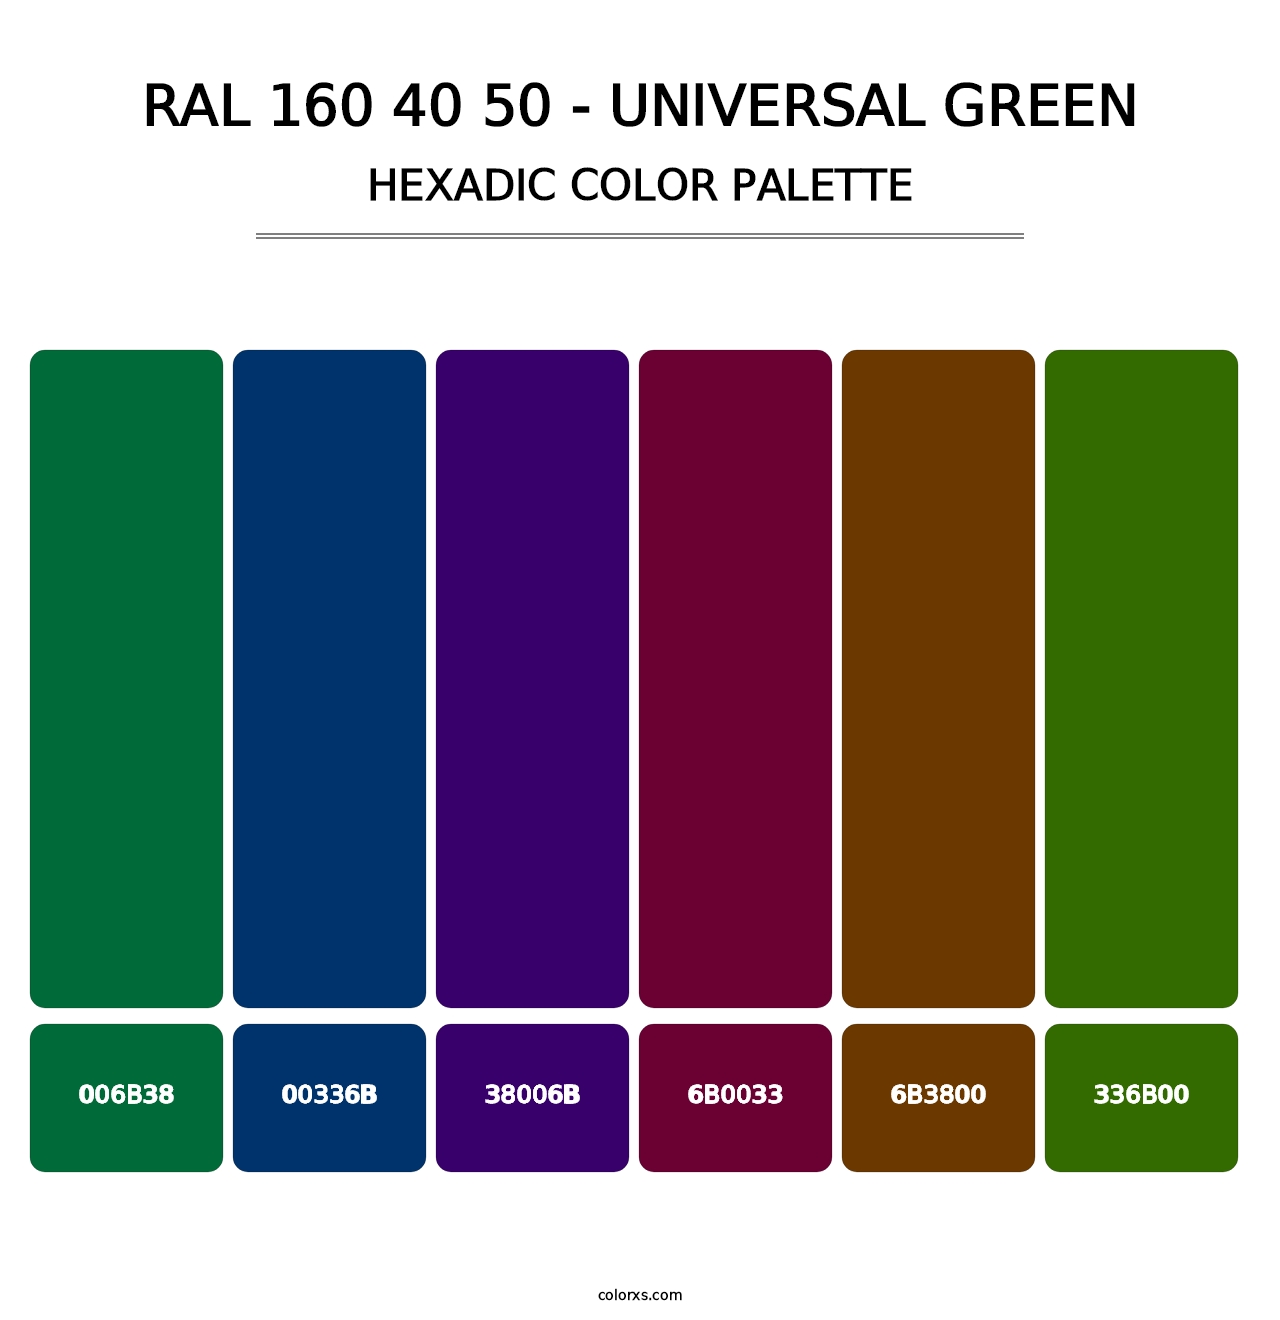 RAL 160 40 50 - Universal Green - Hexadic Color Palette